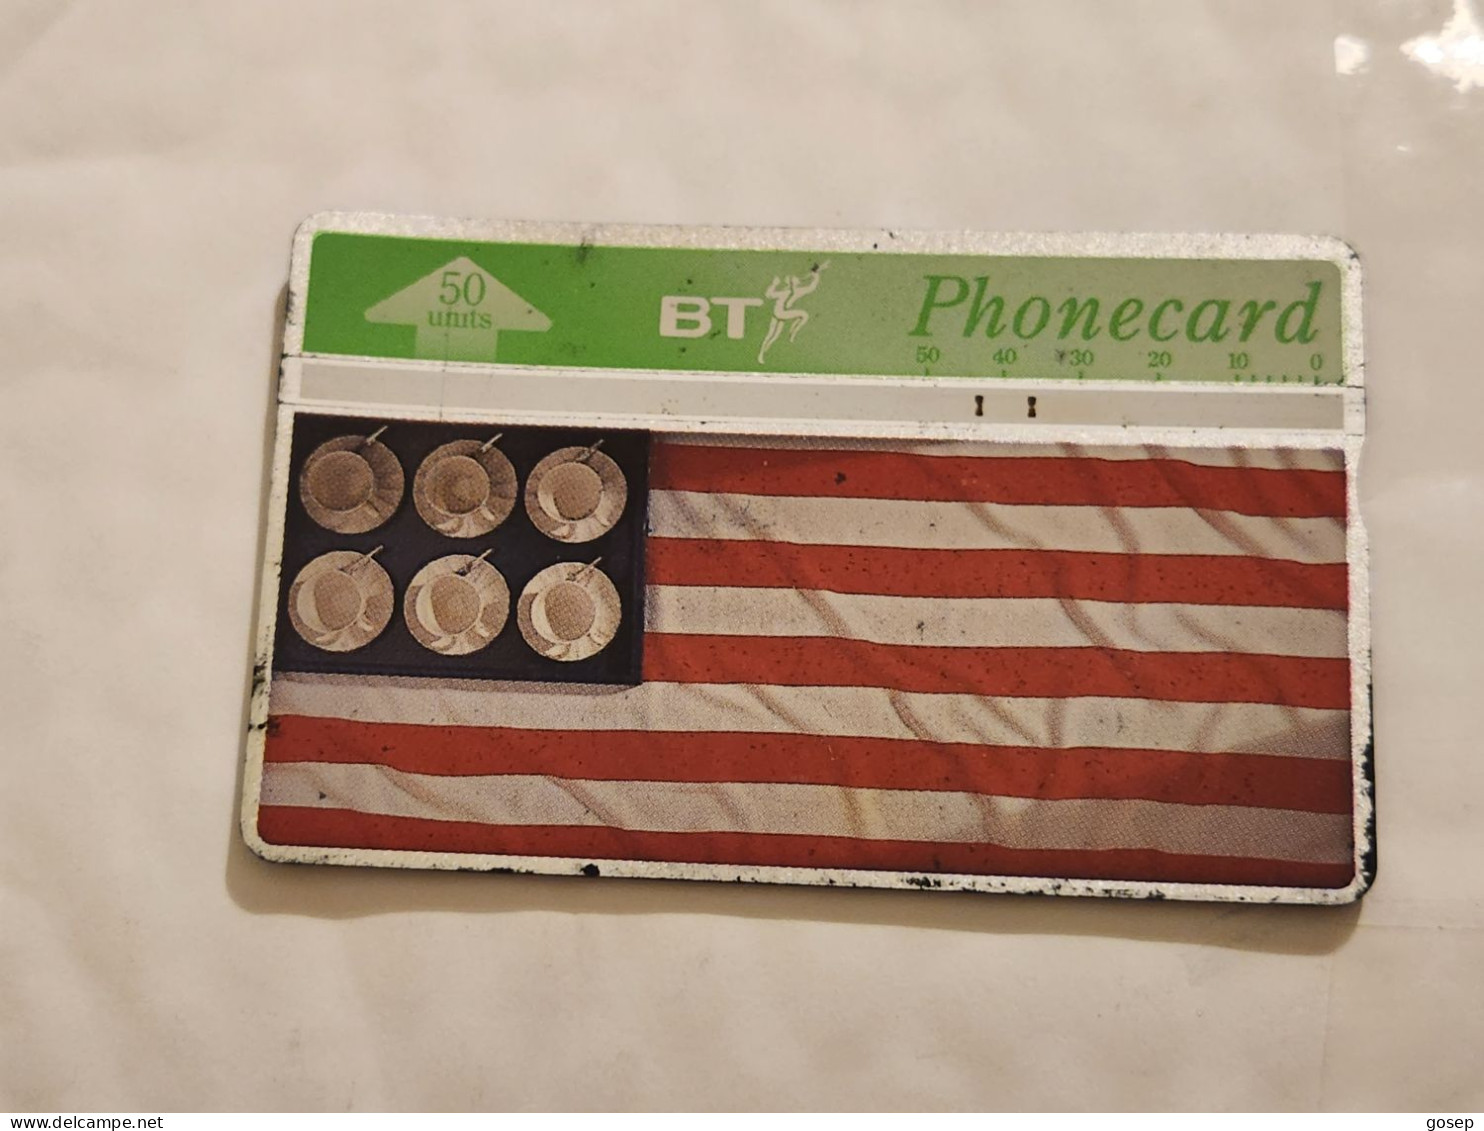 United Kingdom-(BTC147)-Flying The Flag 1(U.S.A)-(1010)(50units)(506G36183)price Cataloge3.00£ Used+1card Prepiad Free - BT Souvenir